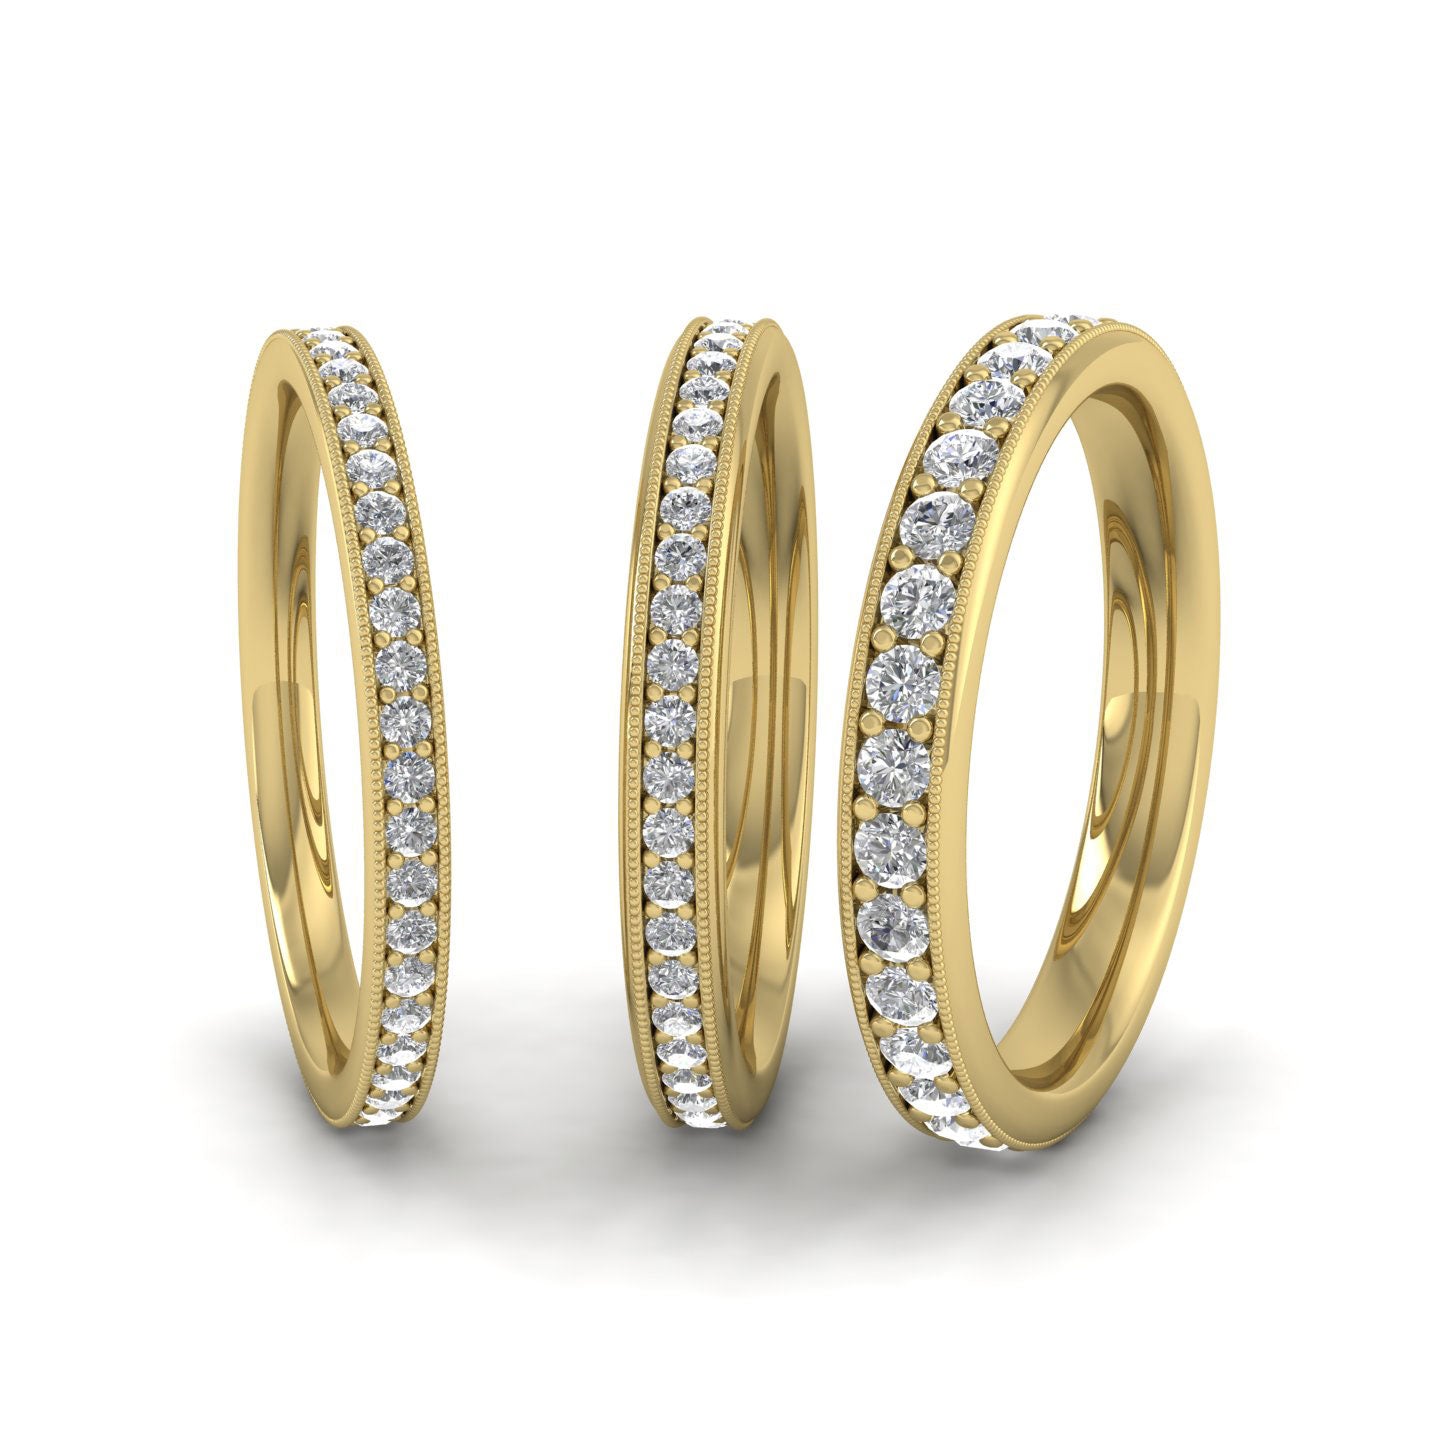 Full Bead Set 0.8ct Round Brilliant Cut Diamond With Millgrain Surround 18ct Yellow Gold 3mm Wedding Ring